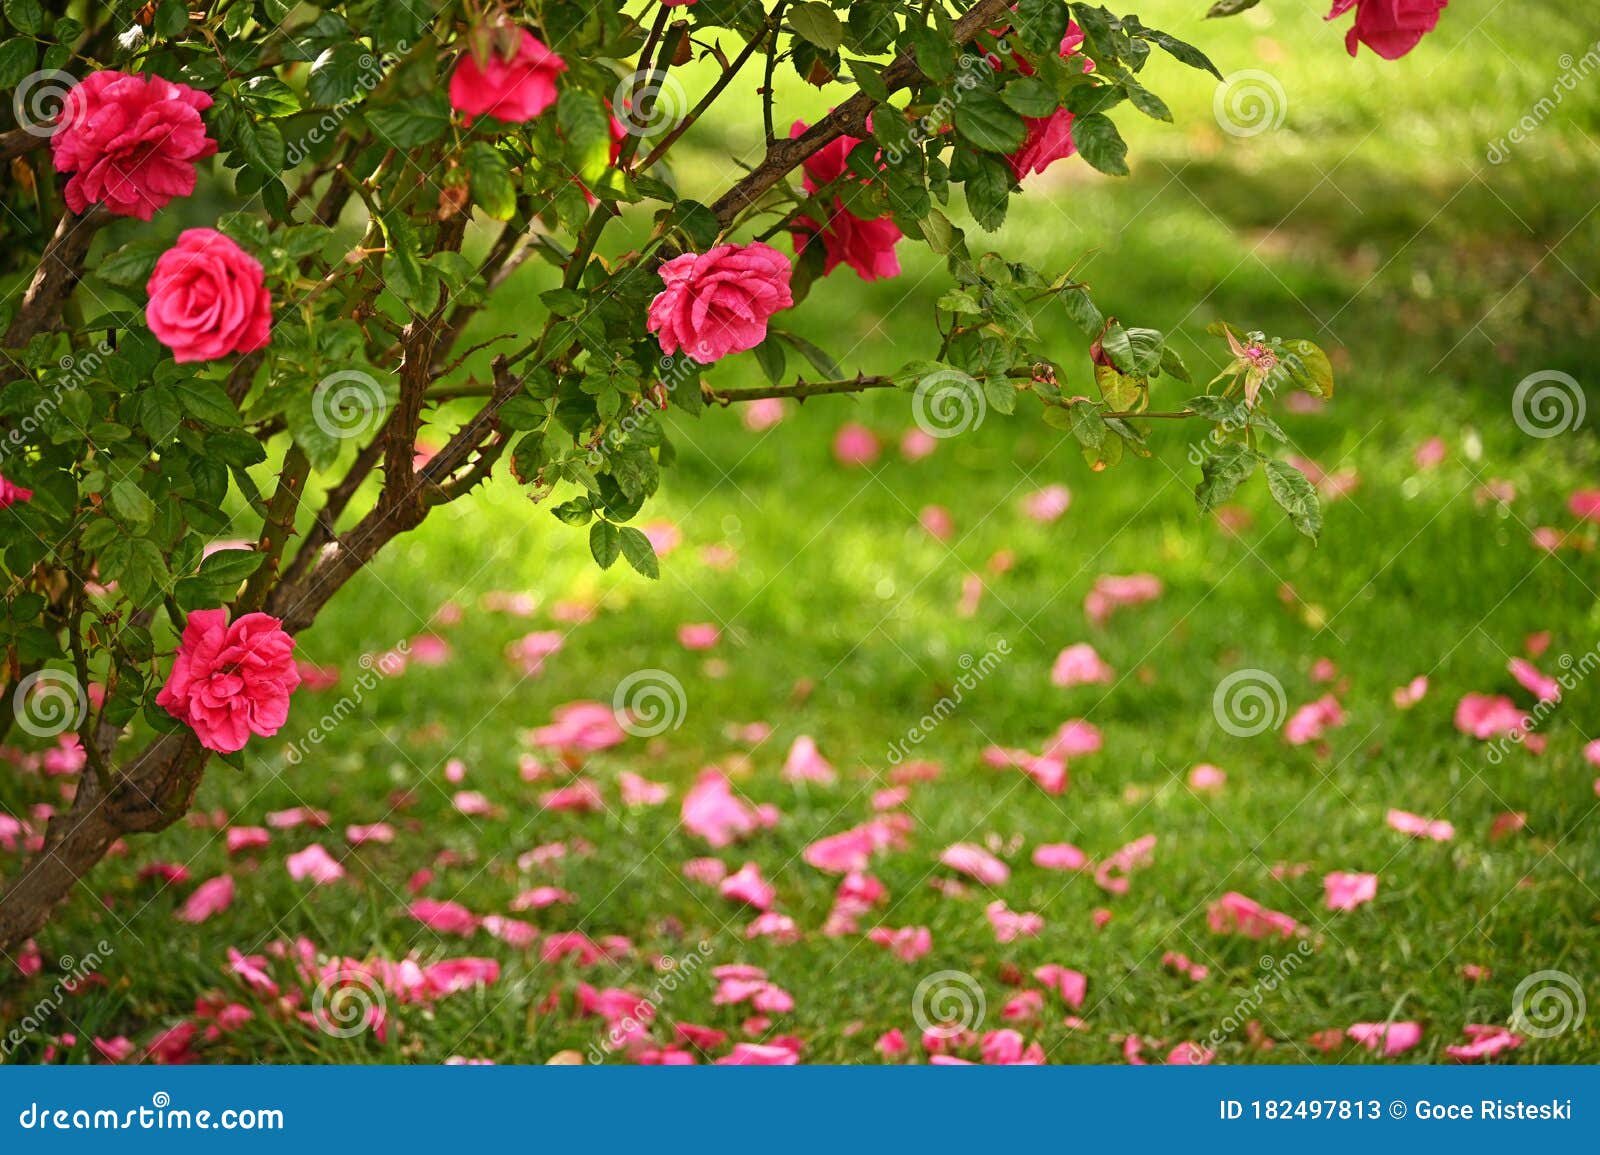 Red Roses Flower Garden Detail Nature Stock Image - Image of blossom,  green: 182497813